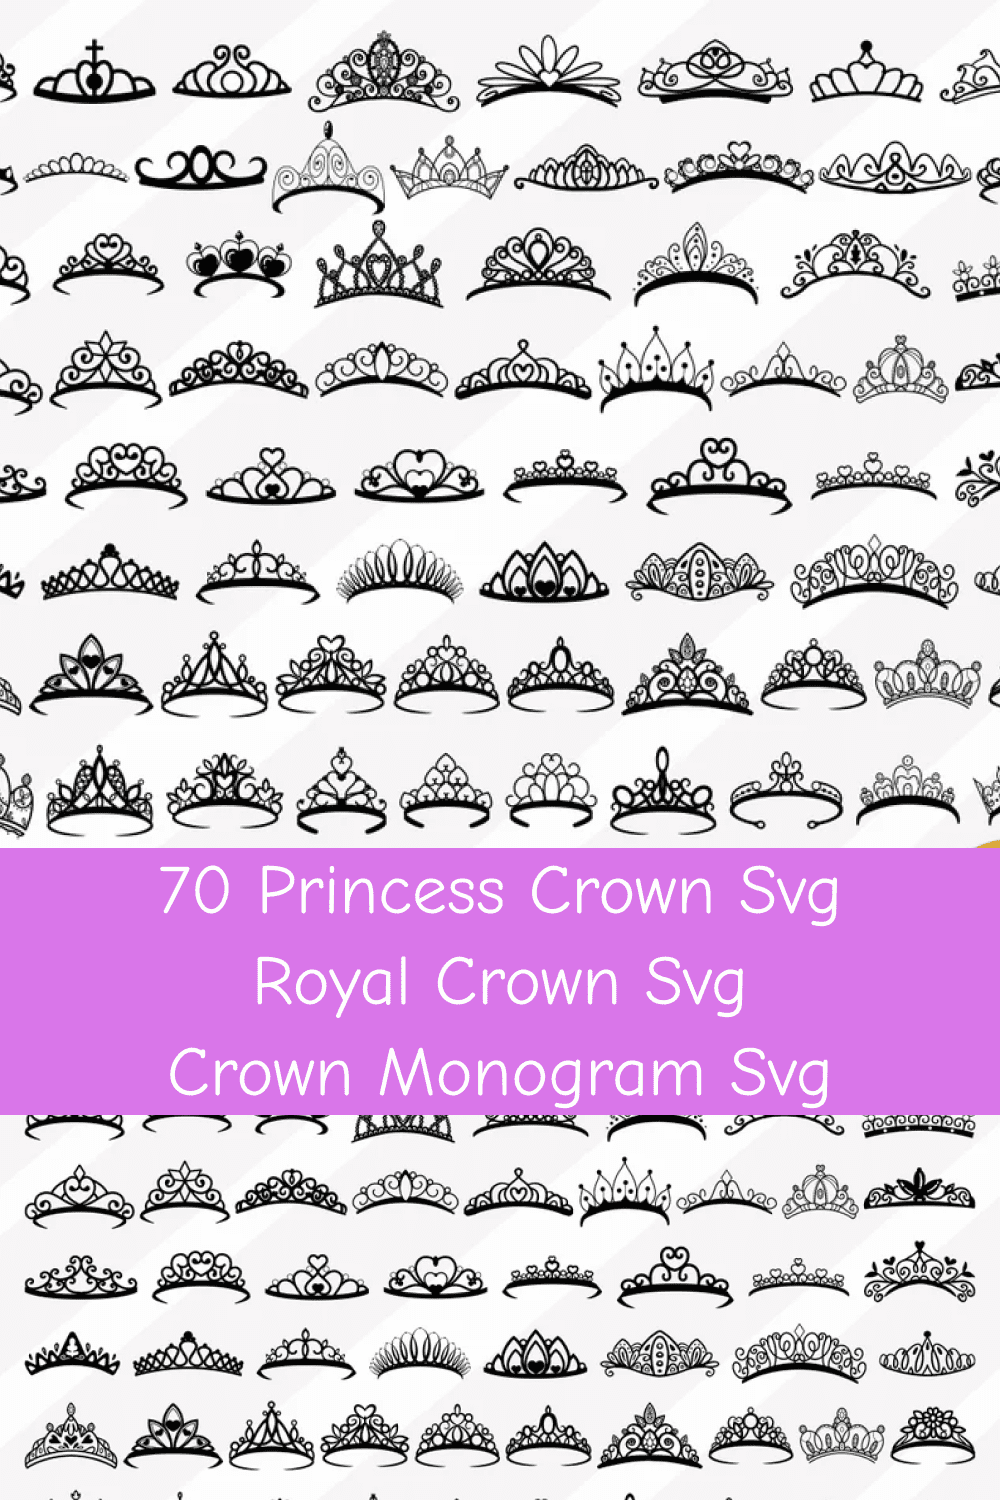 Interesting crown designs for little princess.